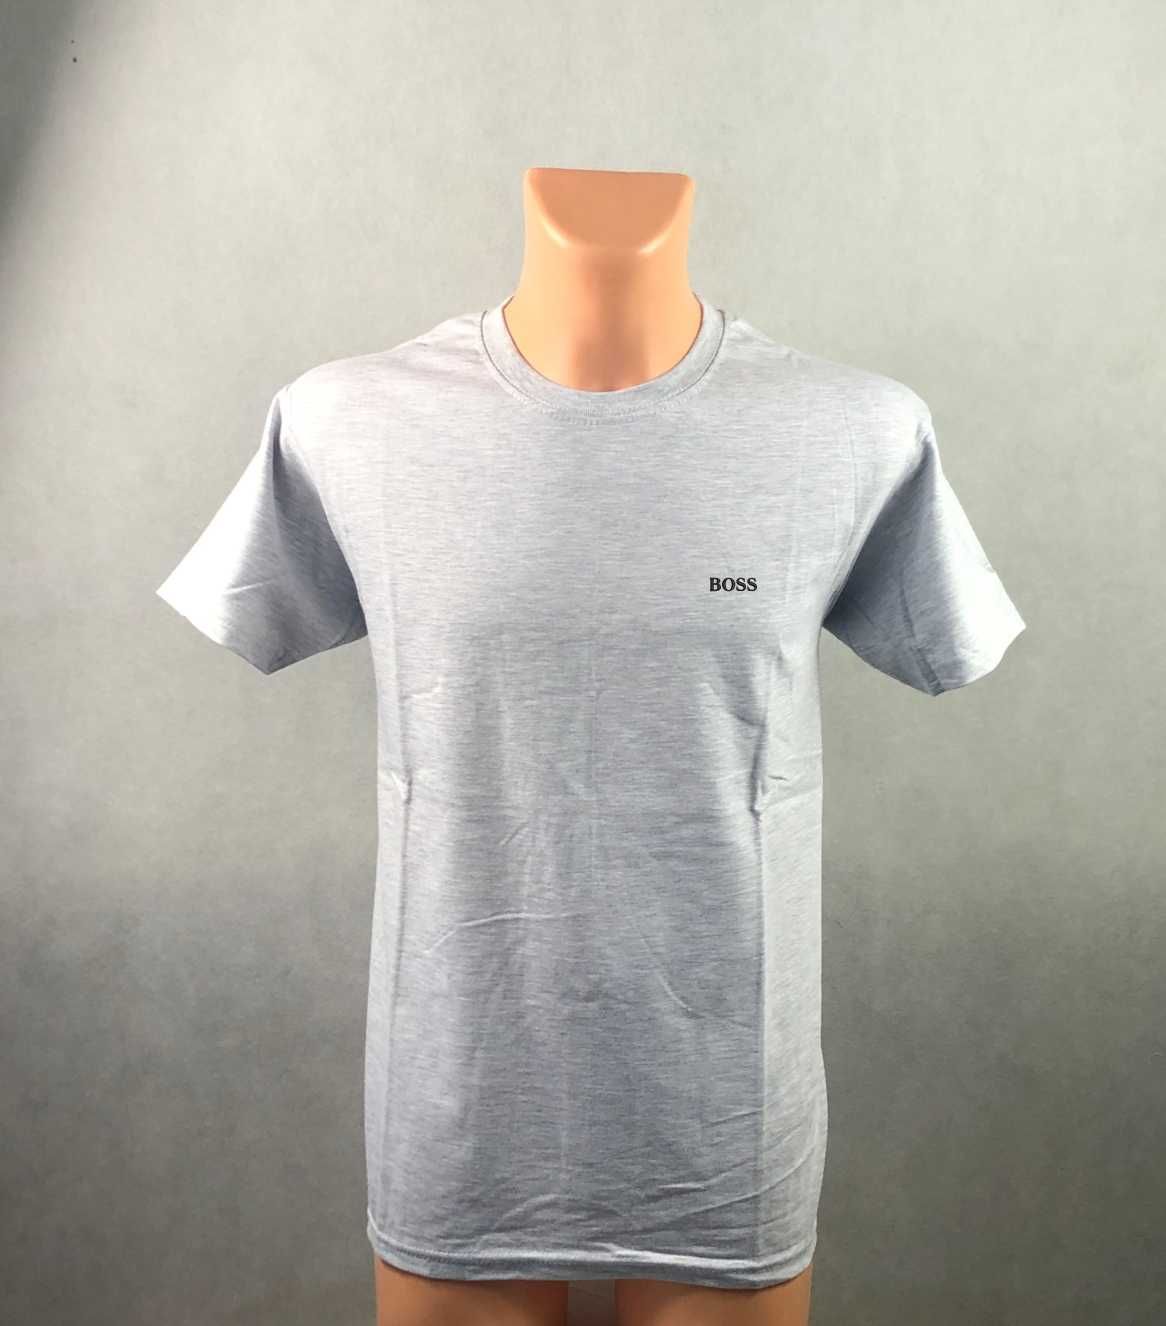 Hugo Boss koszulka t-shirt 4XL szara